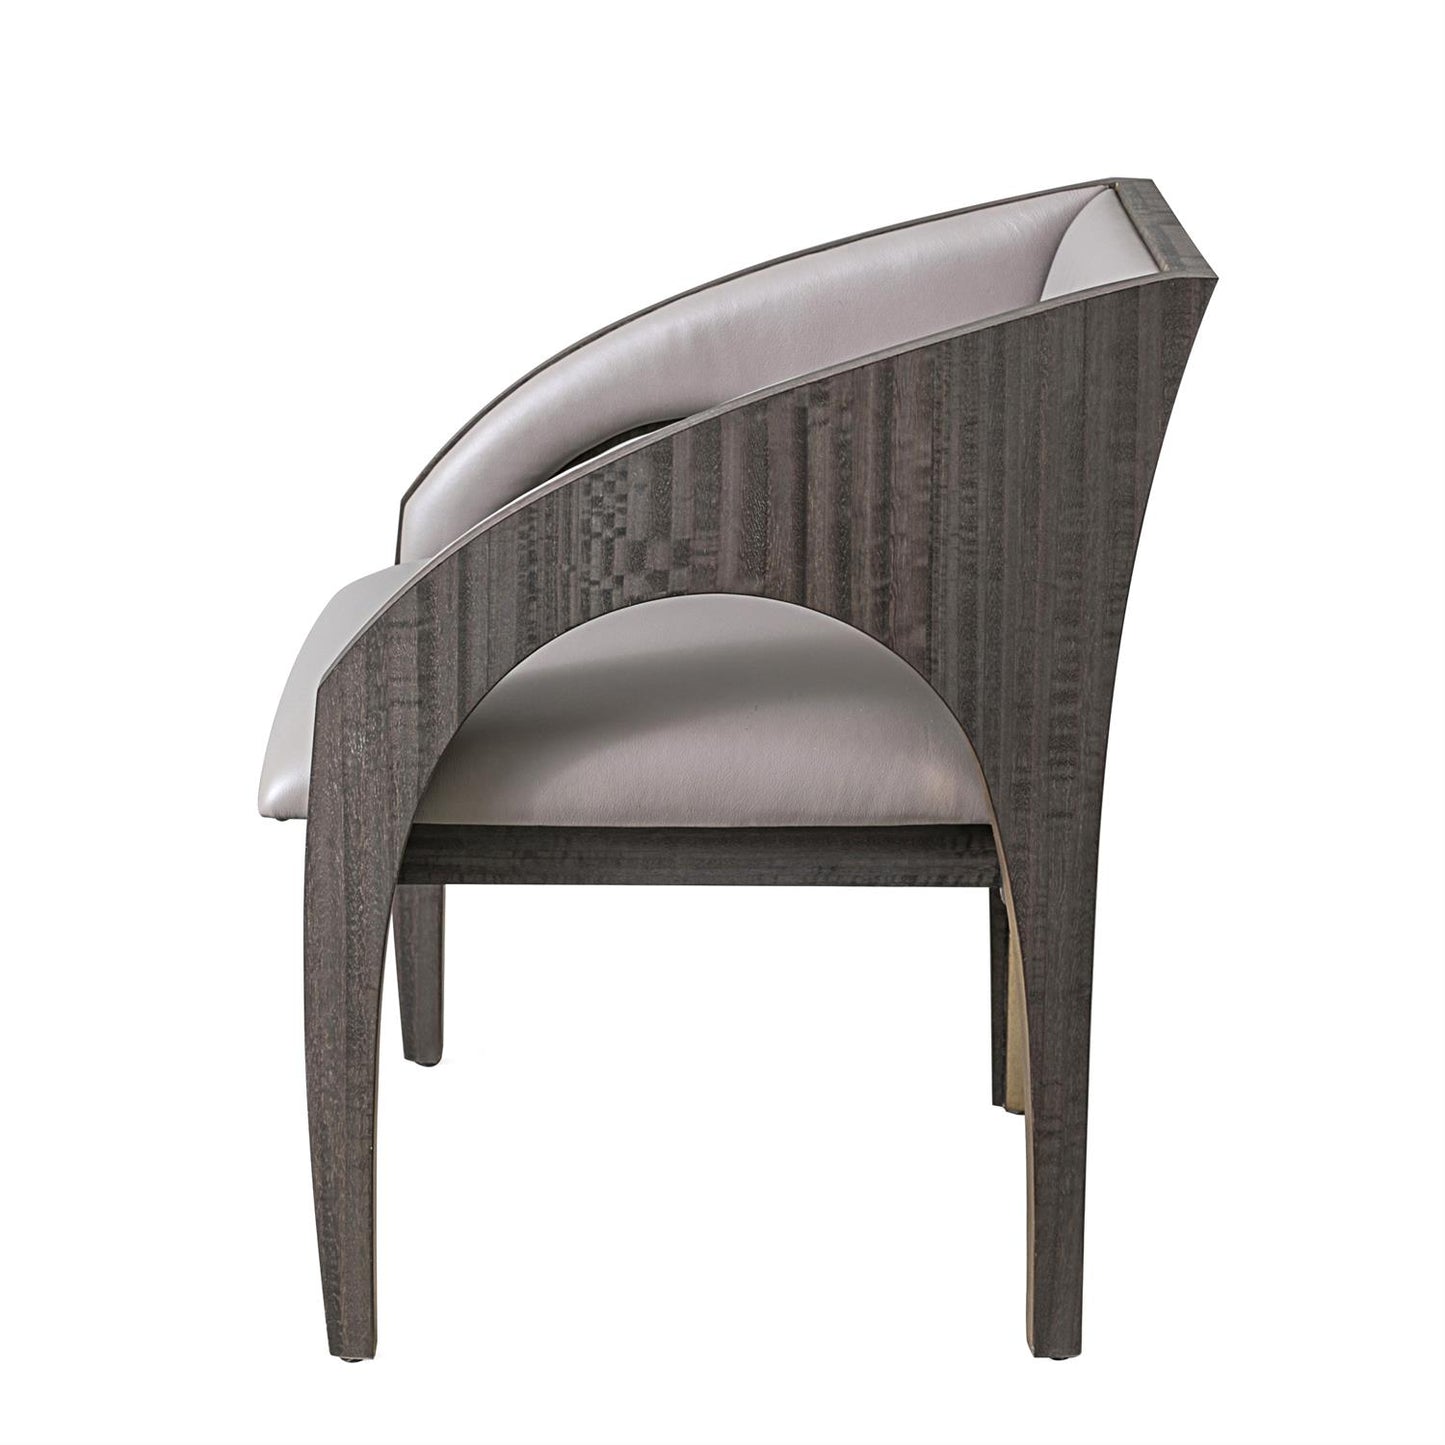 Arches Occasional Chair - Grey Leather - Grats Decor Interior Design & Build Inc.